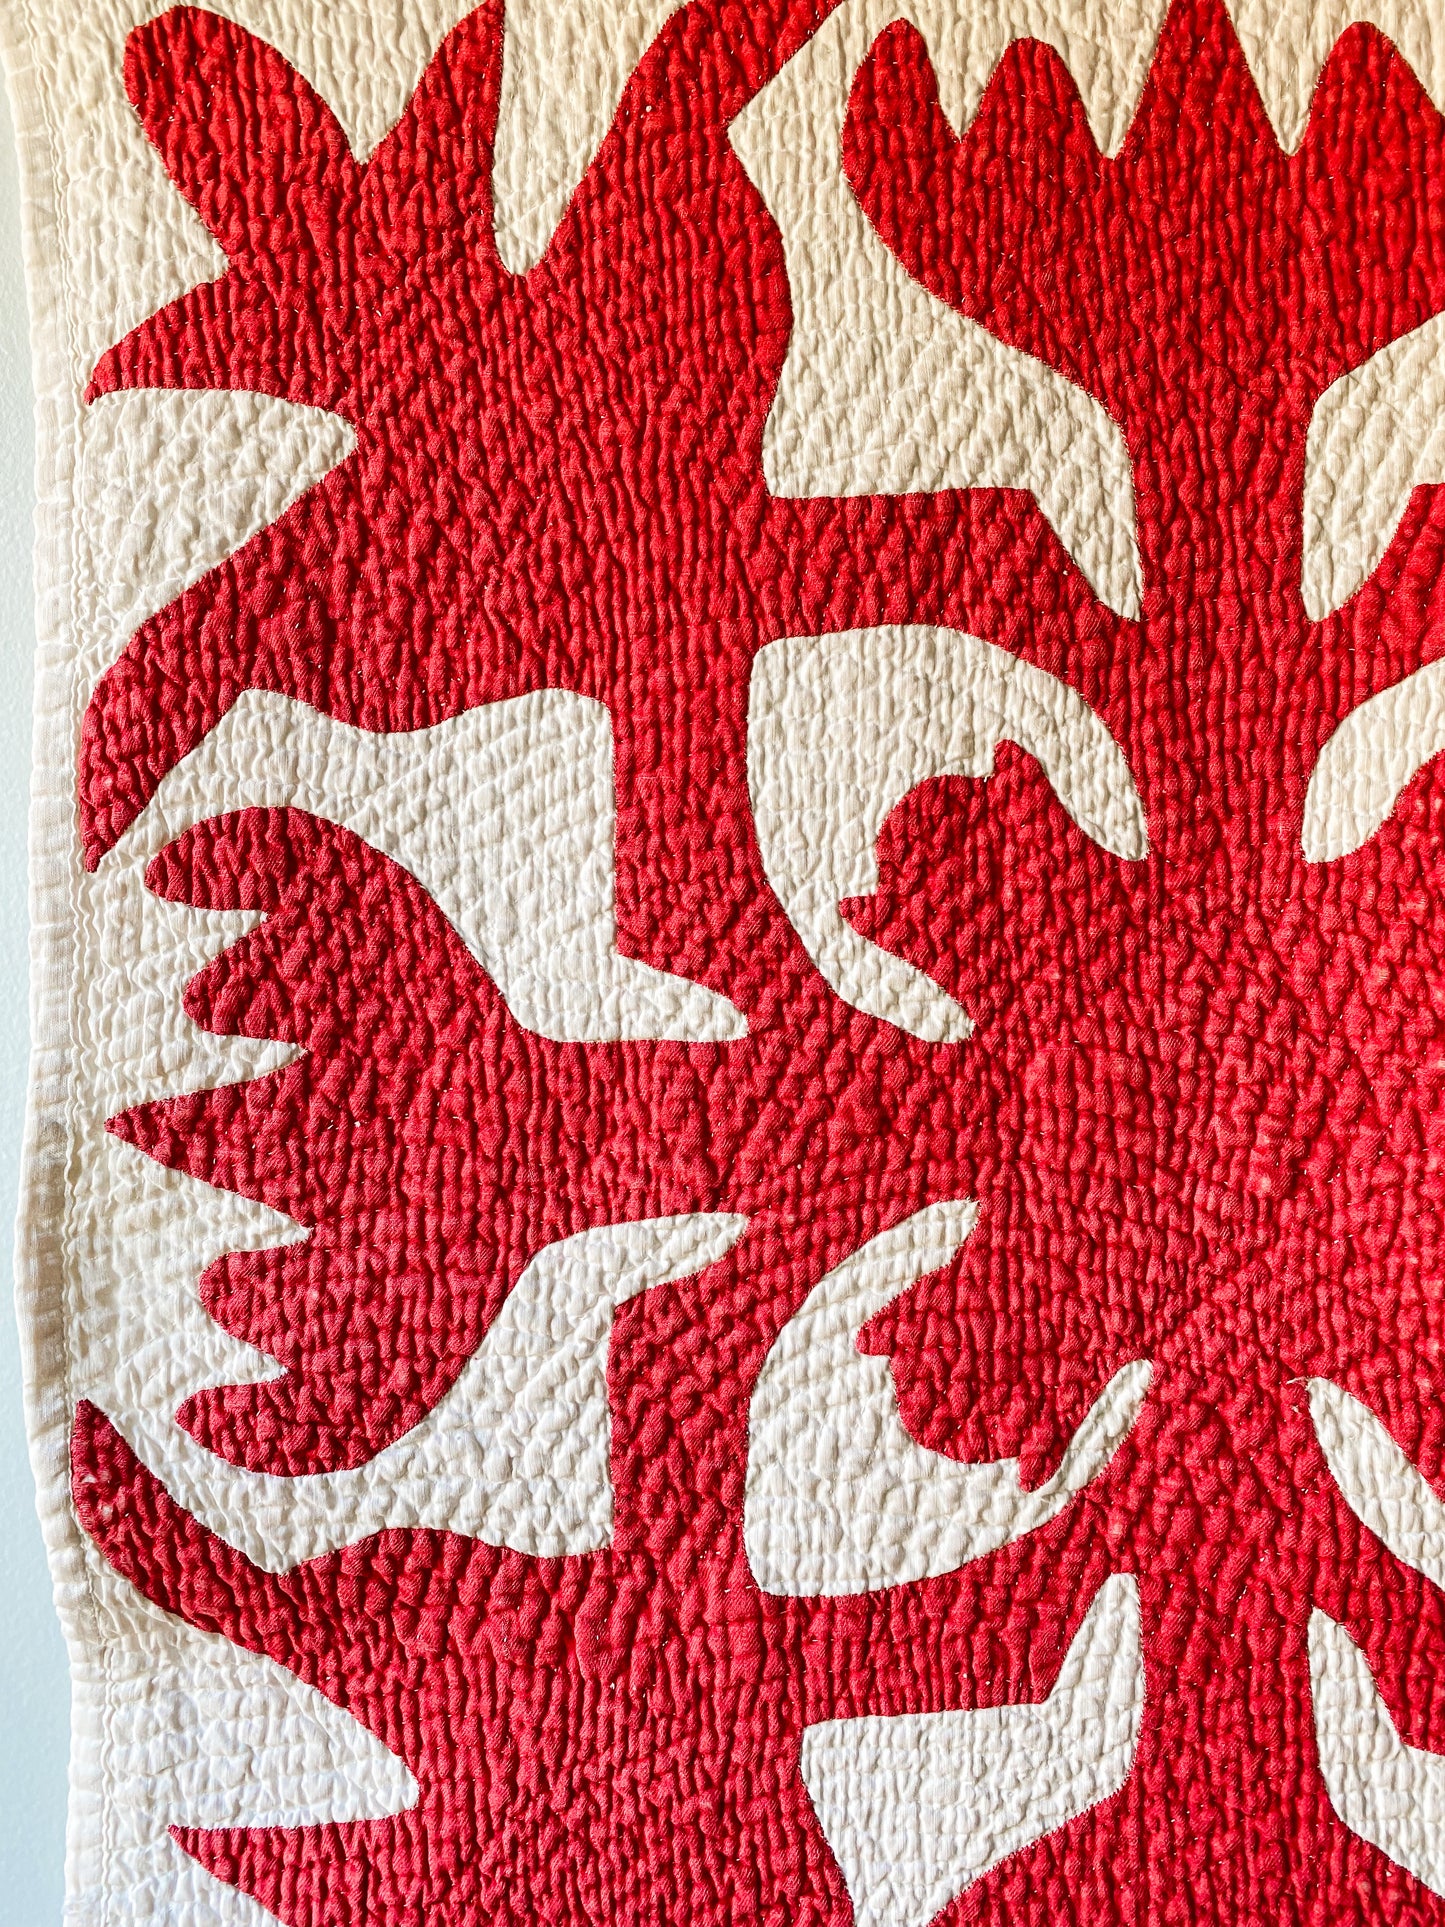 Antique Turkey Red Papercut Applique Quilt, c1850